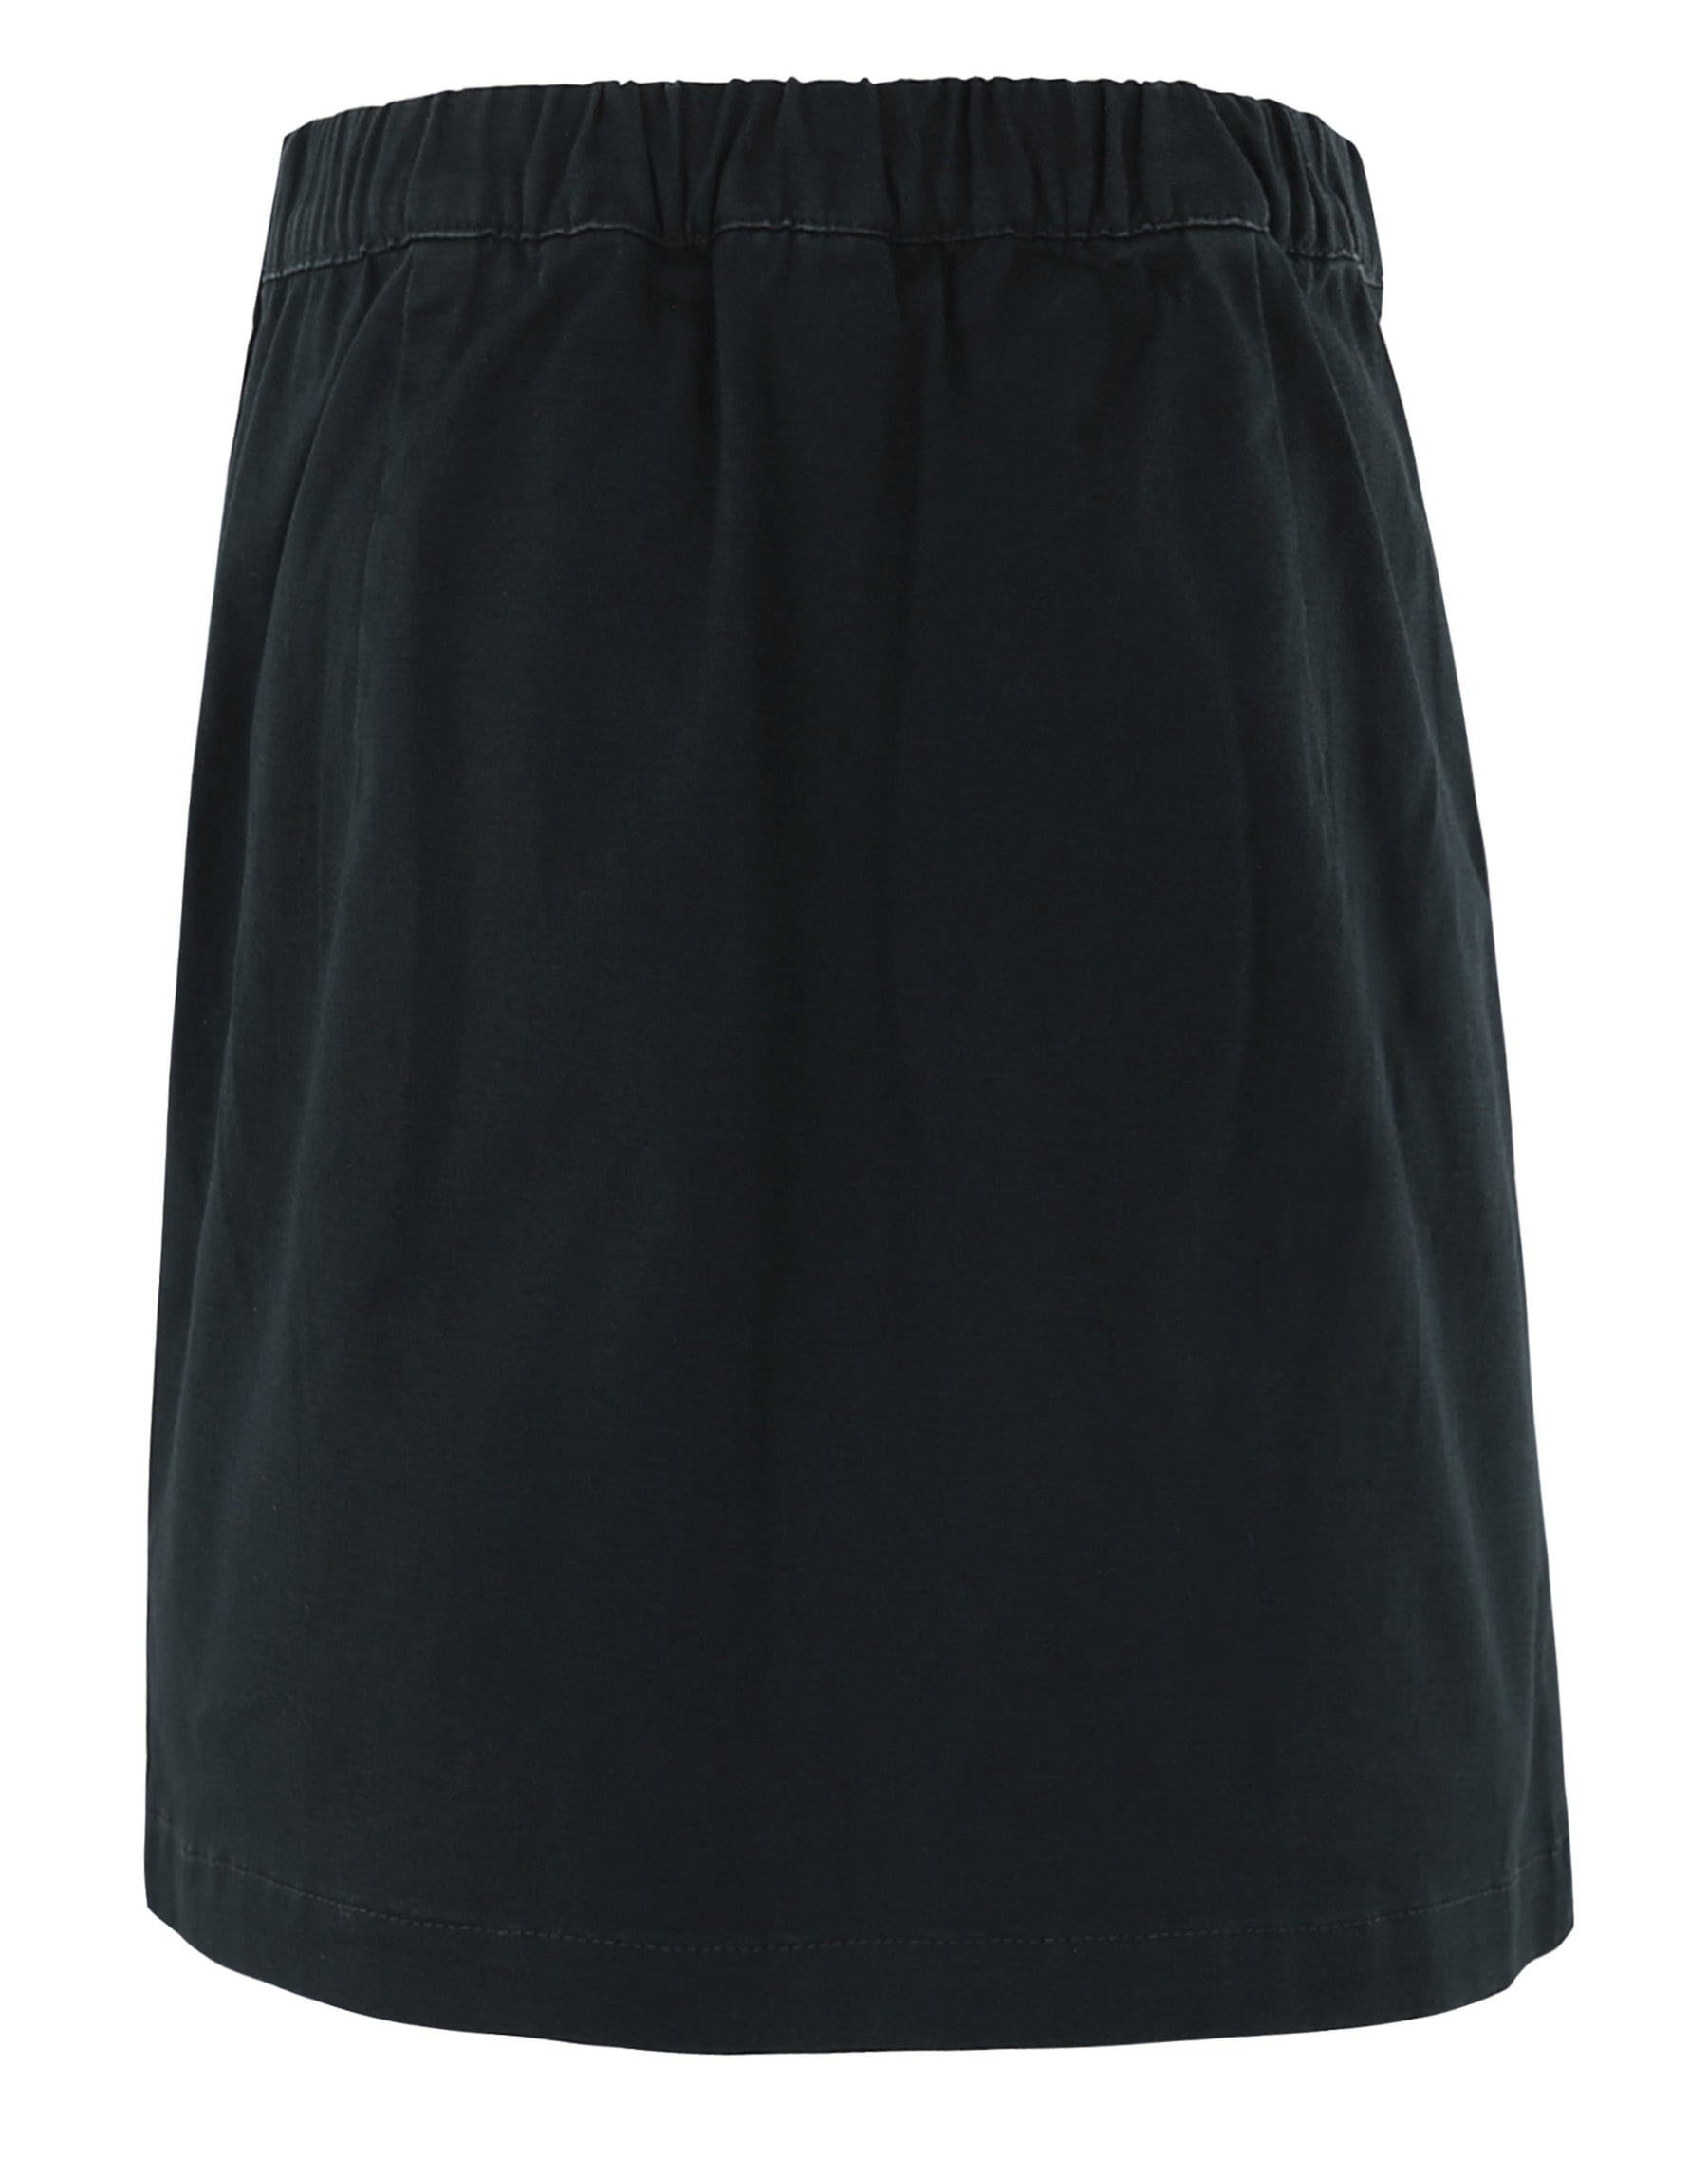 Bienzoe Girl's Cotton Stretchy School Uniforms Pleated Skirt Black 6 ...